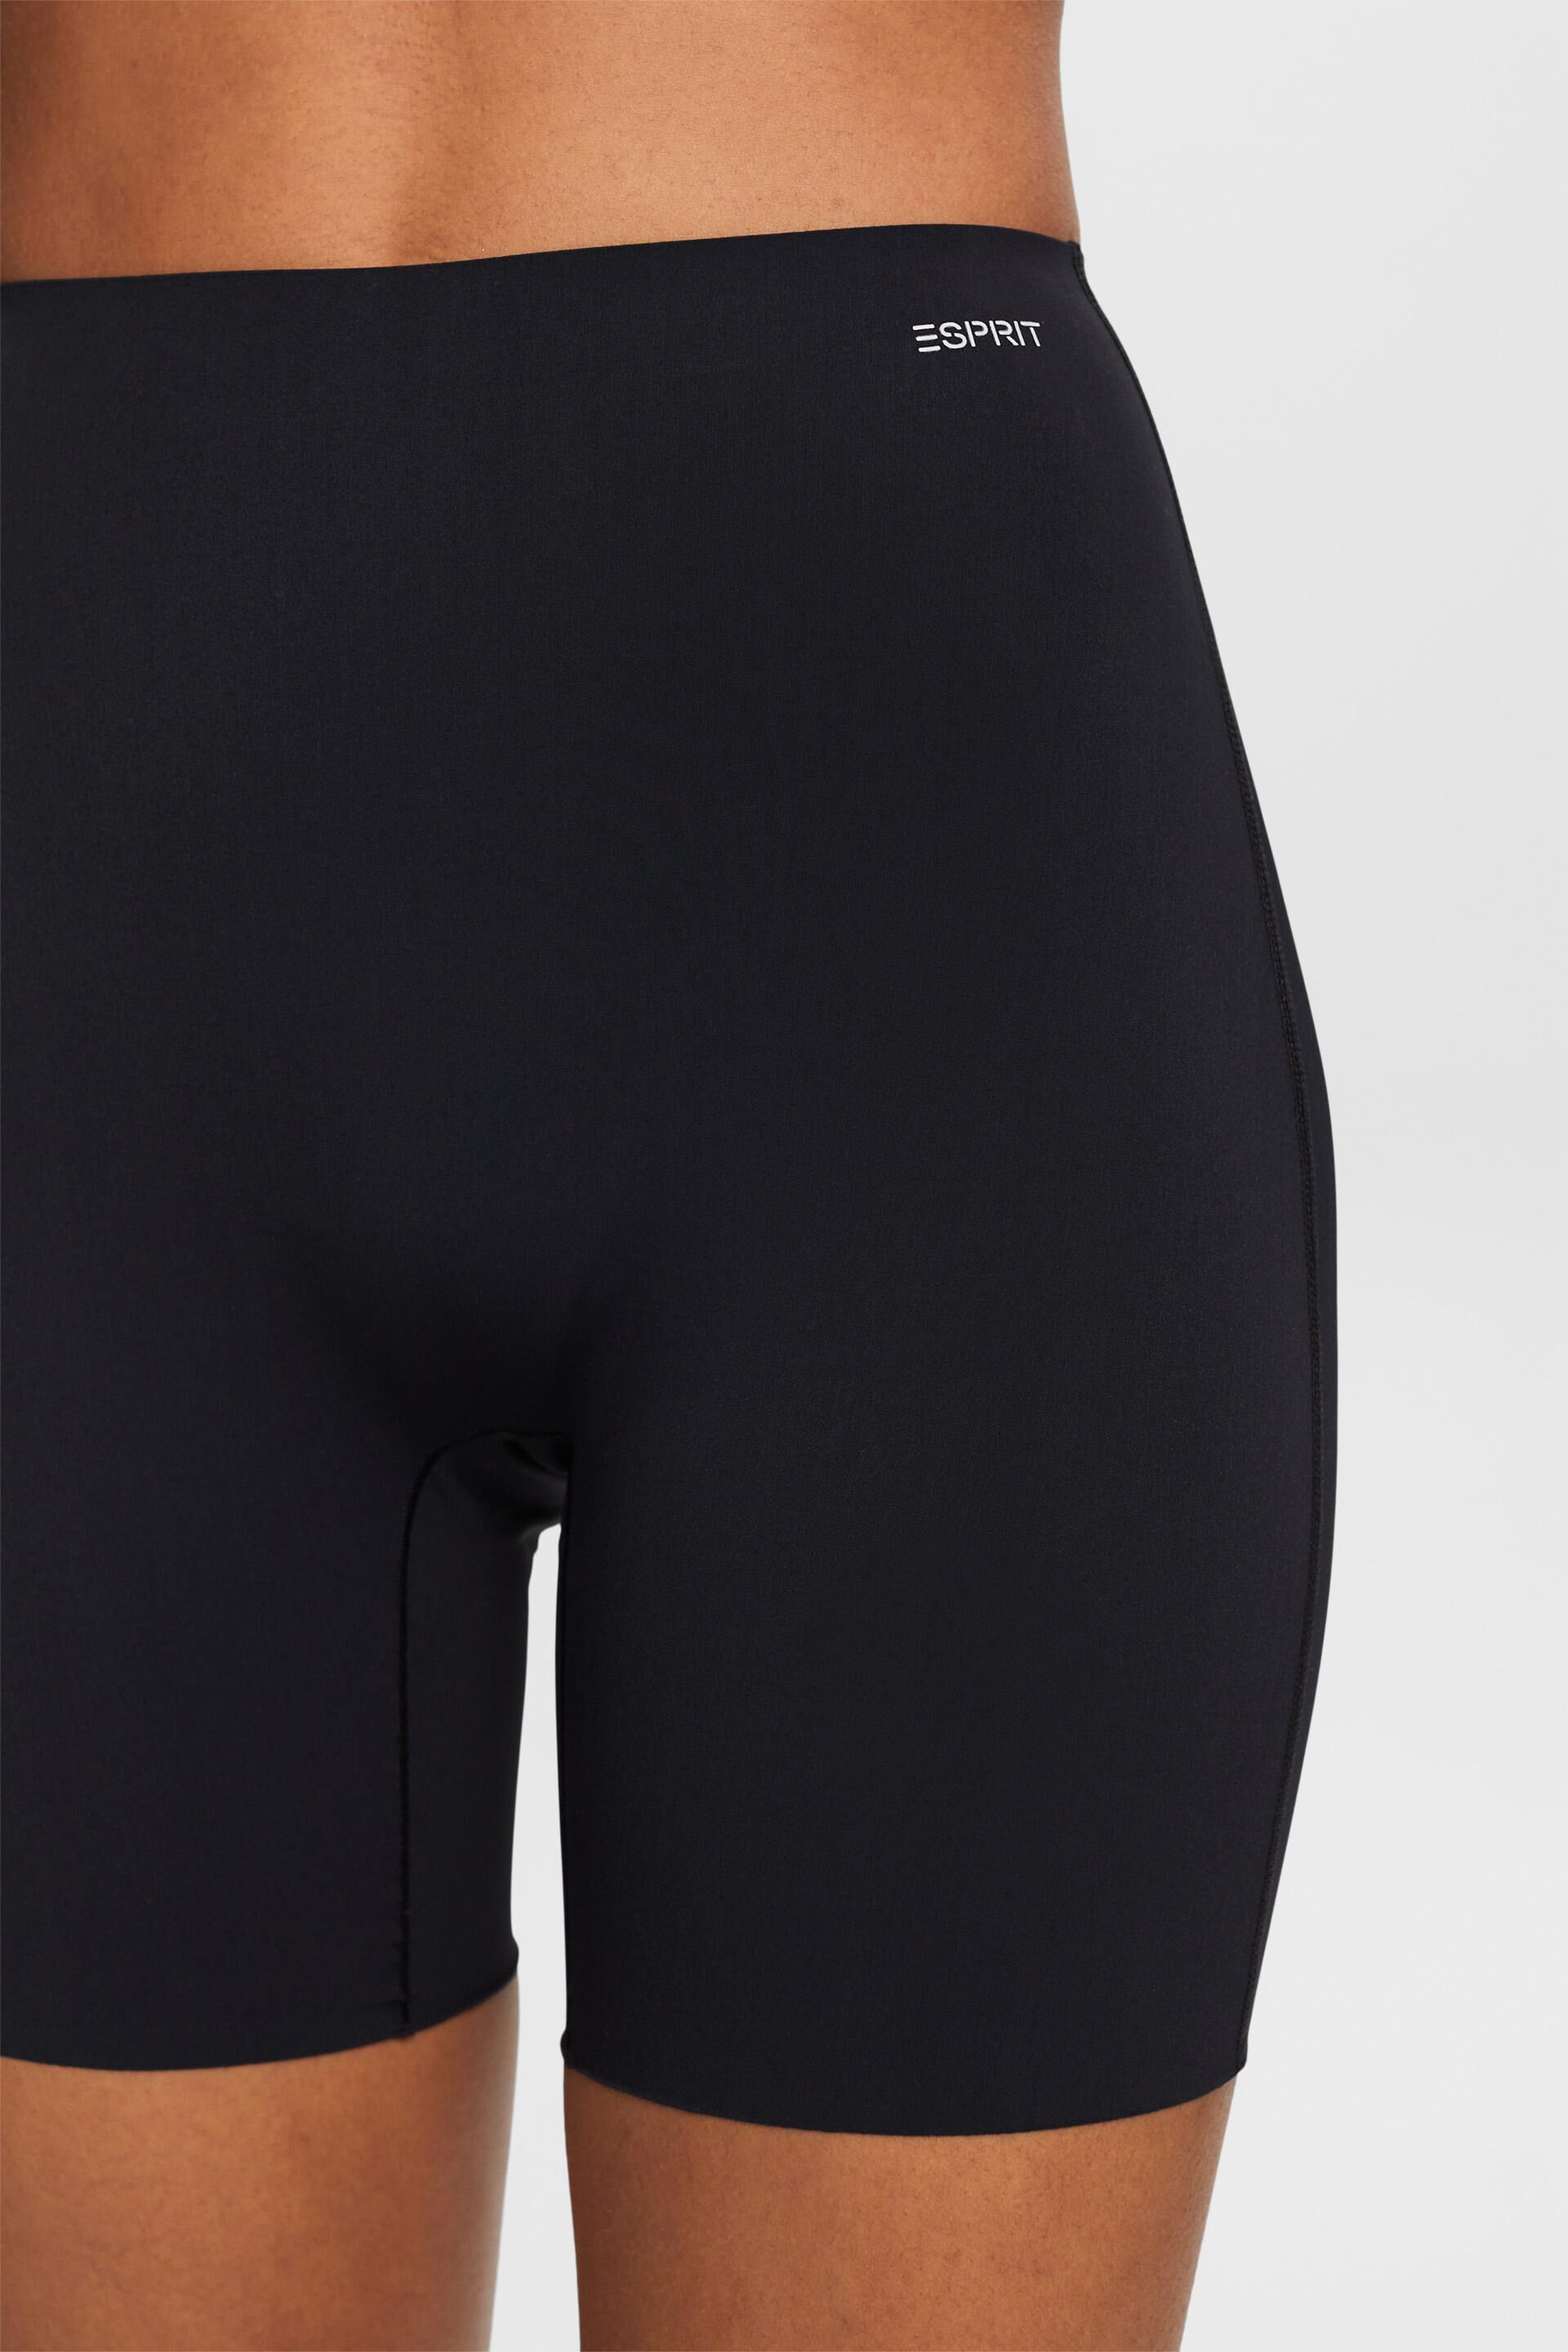 Esprit Shaping Shorts Recycelt: Soft